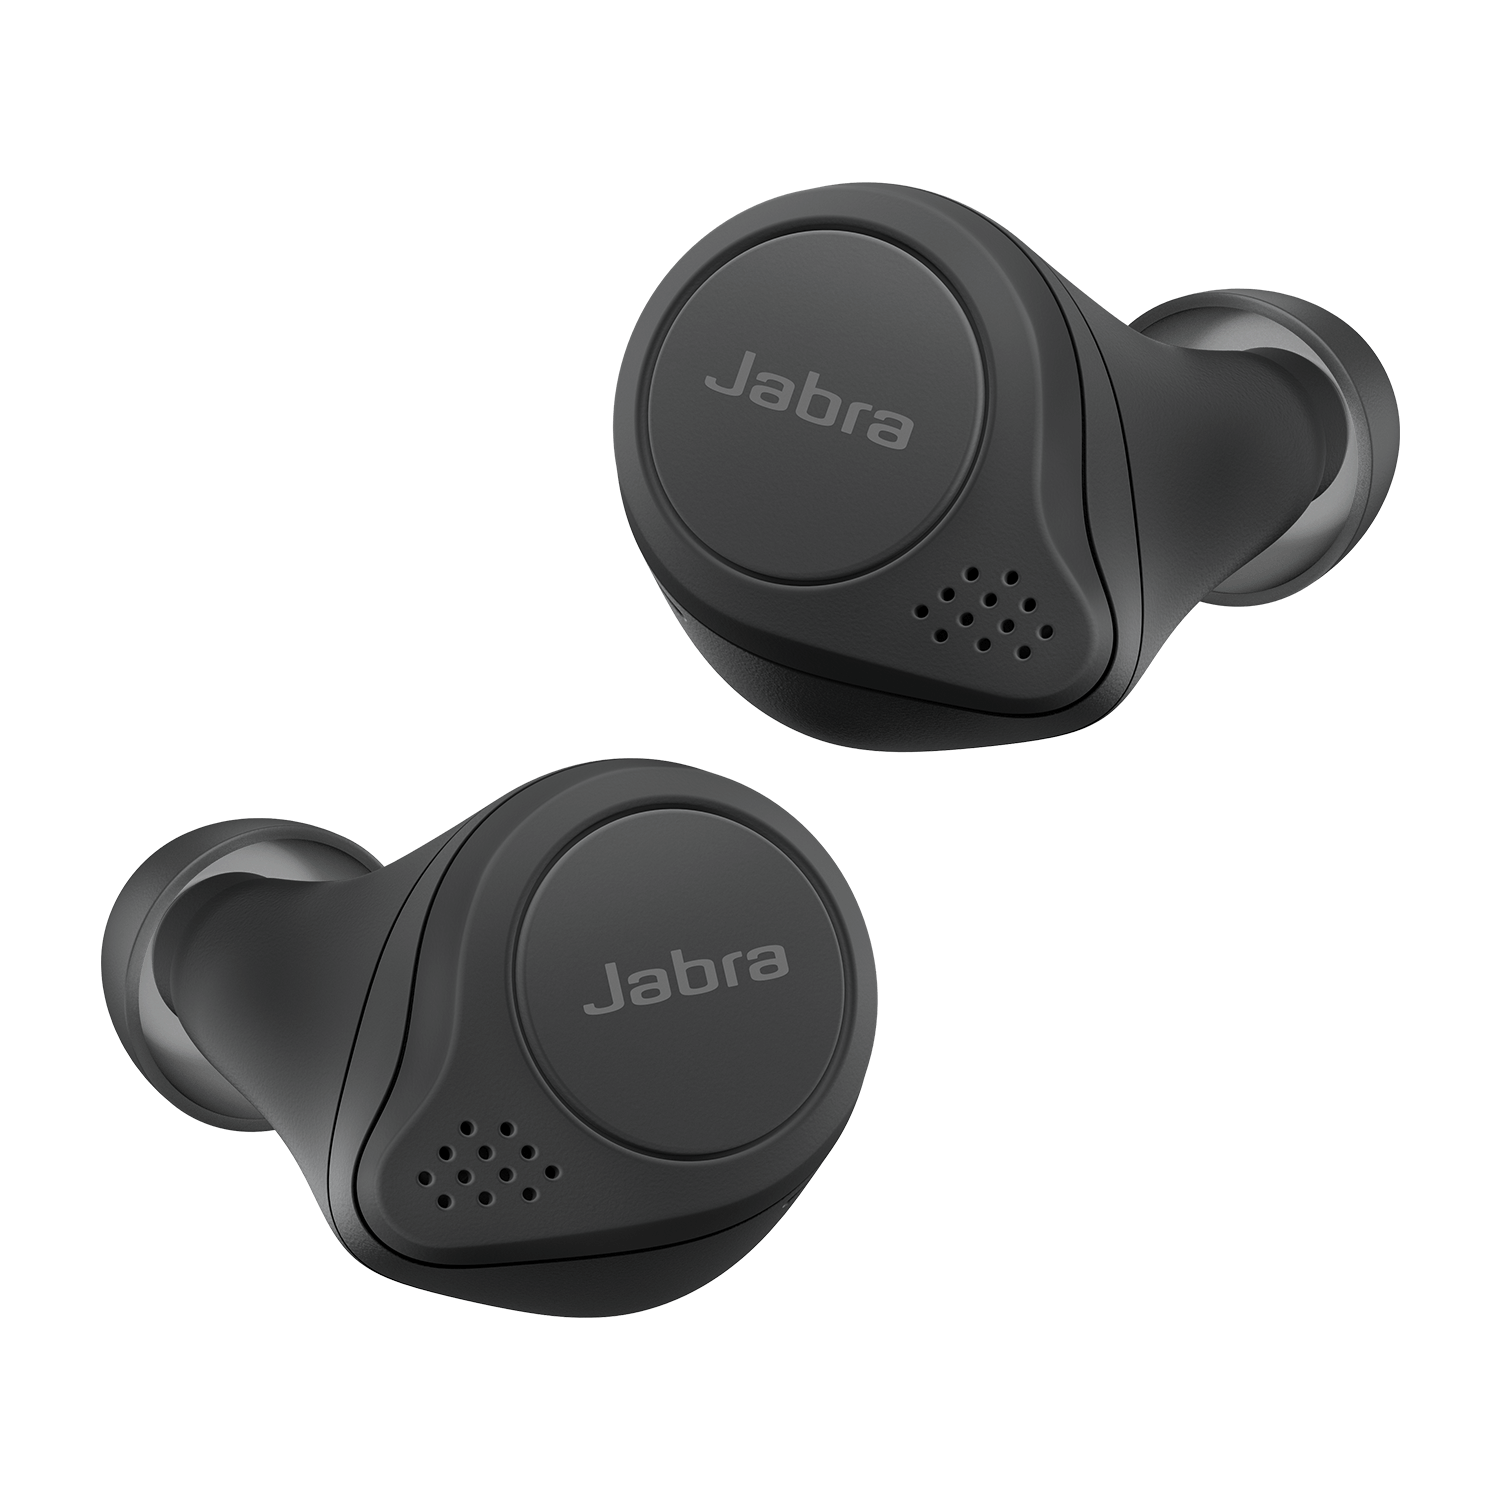 Jabra Elite 75t Replacement Earbuds - Black